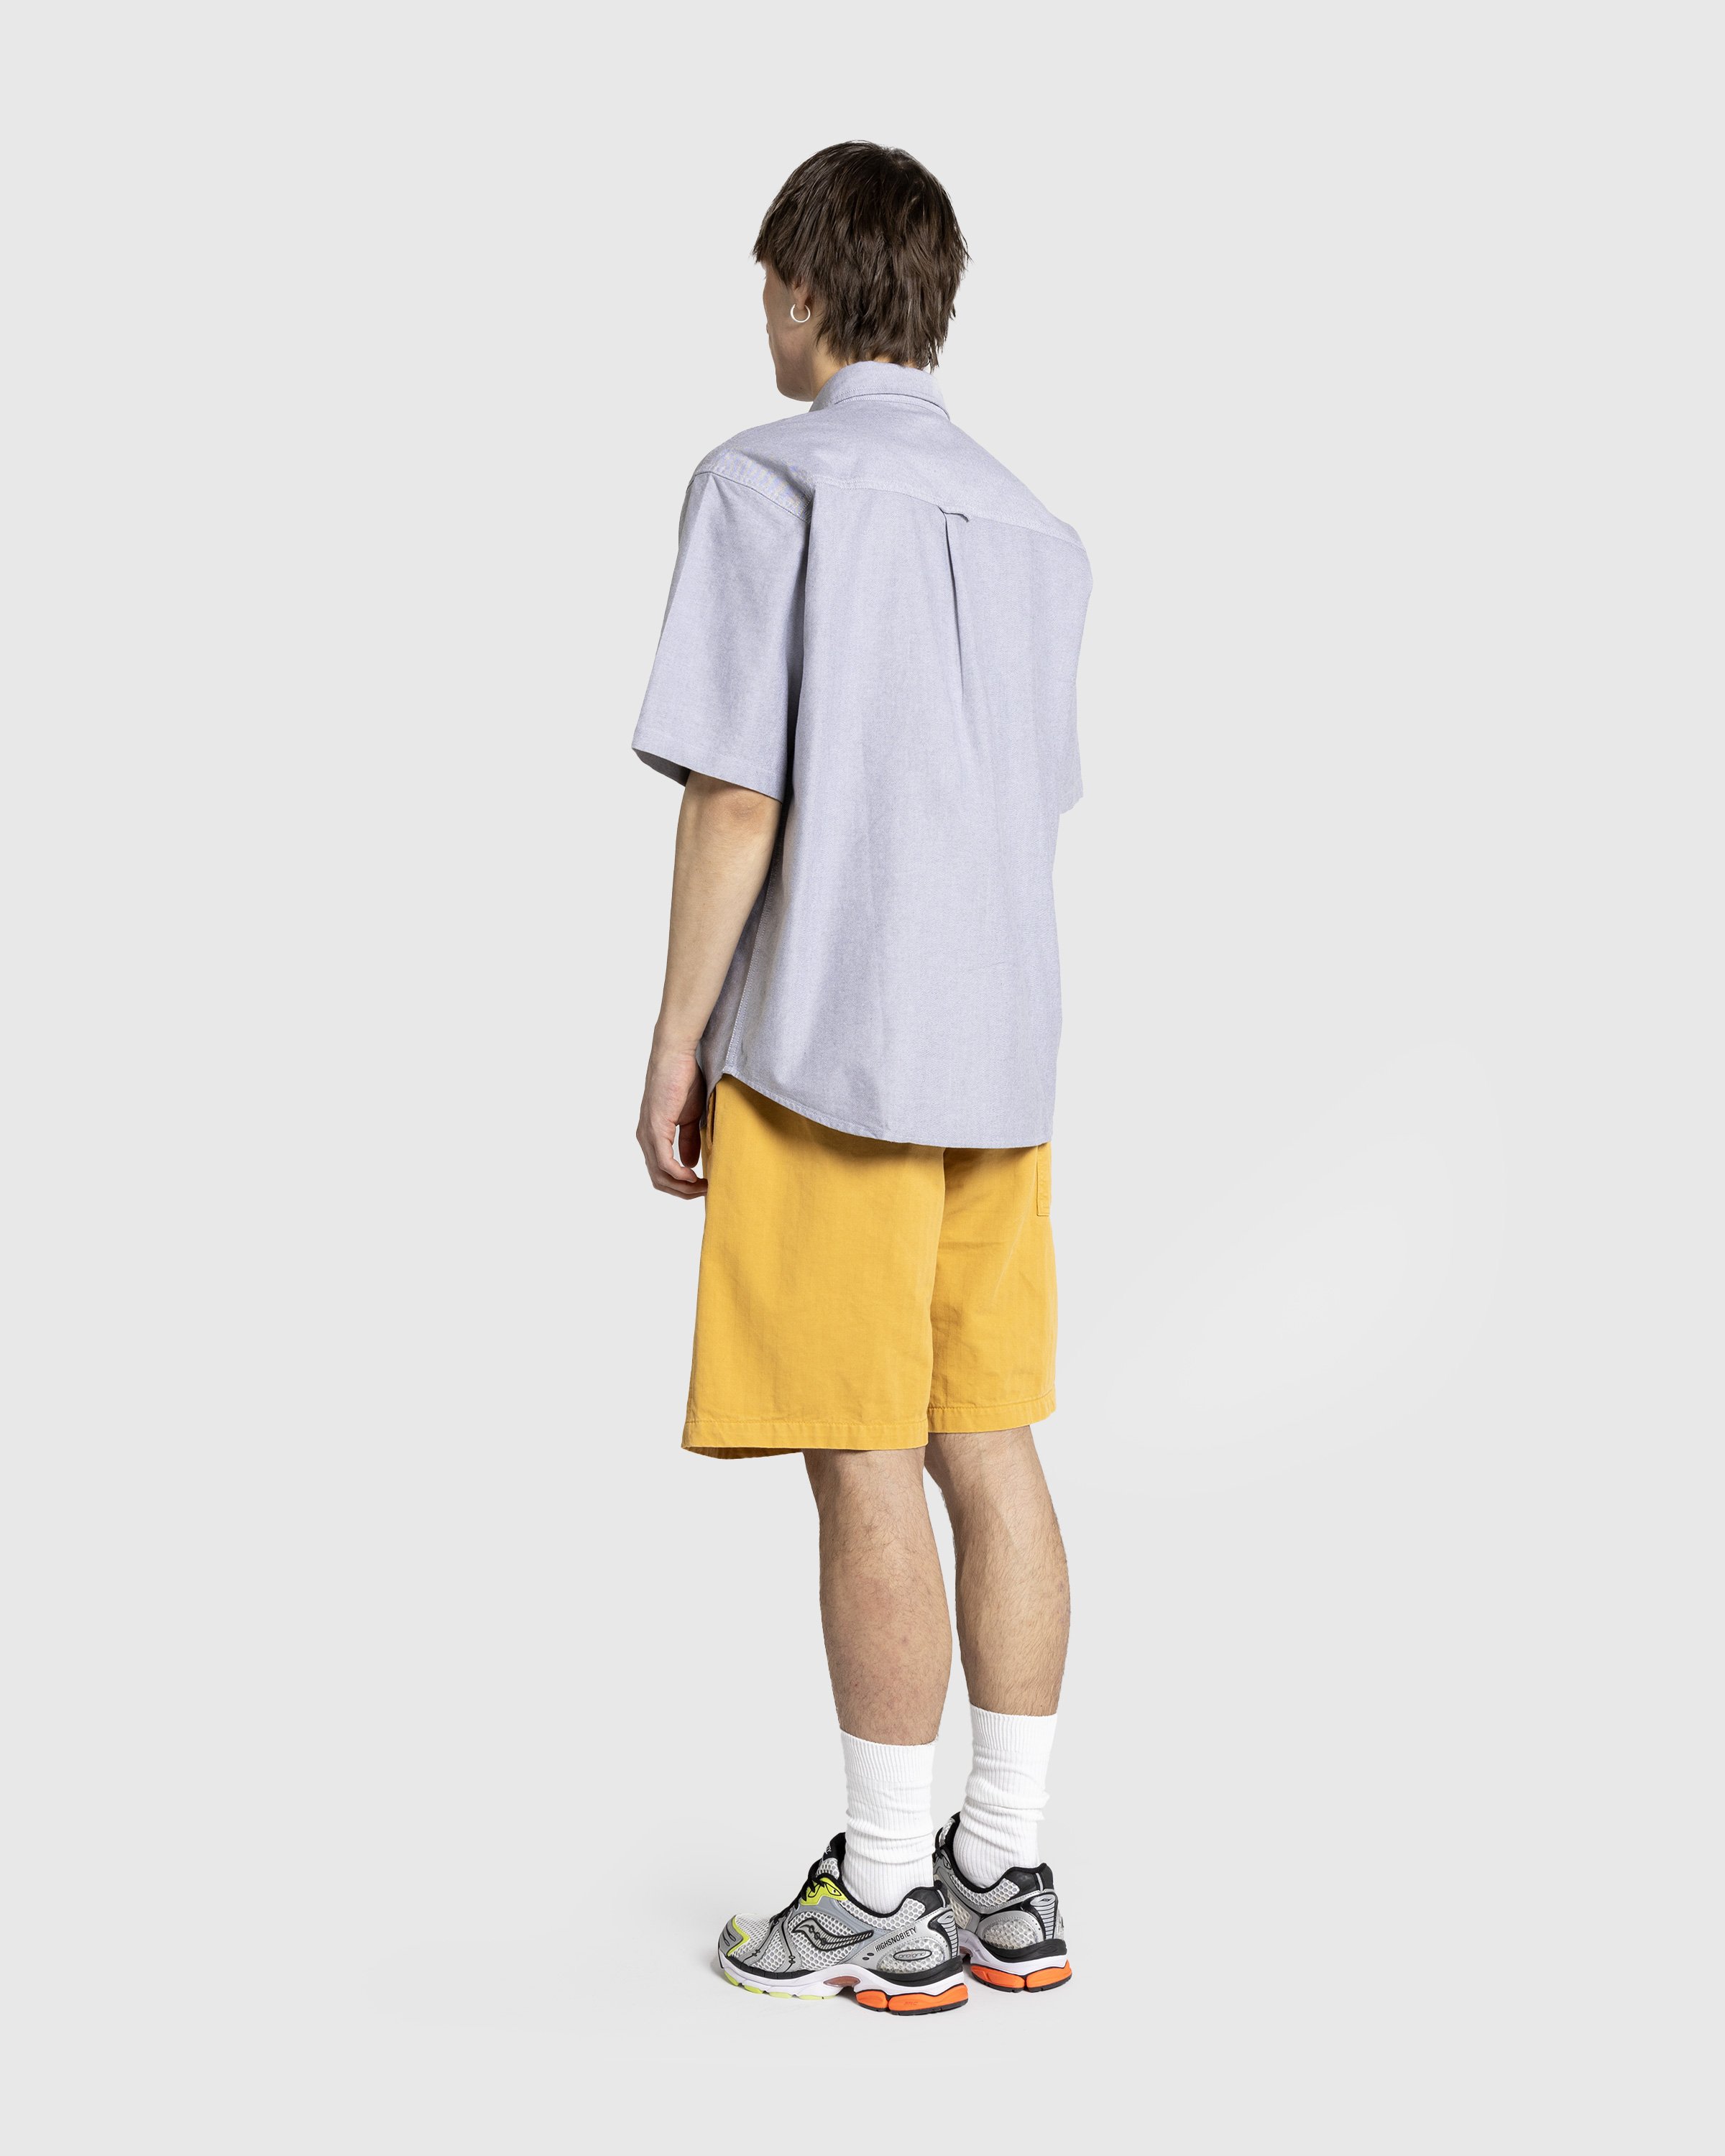 Carhartt WIP - Rainer Short Sunray /garment dyed - Clothing - Yellow - Image 4